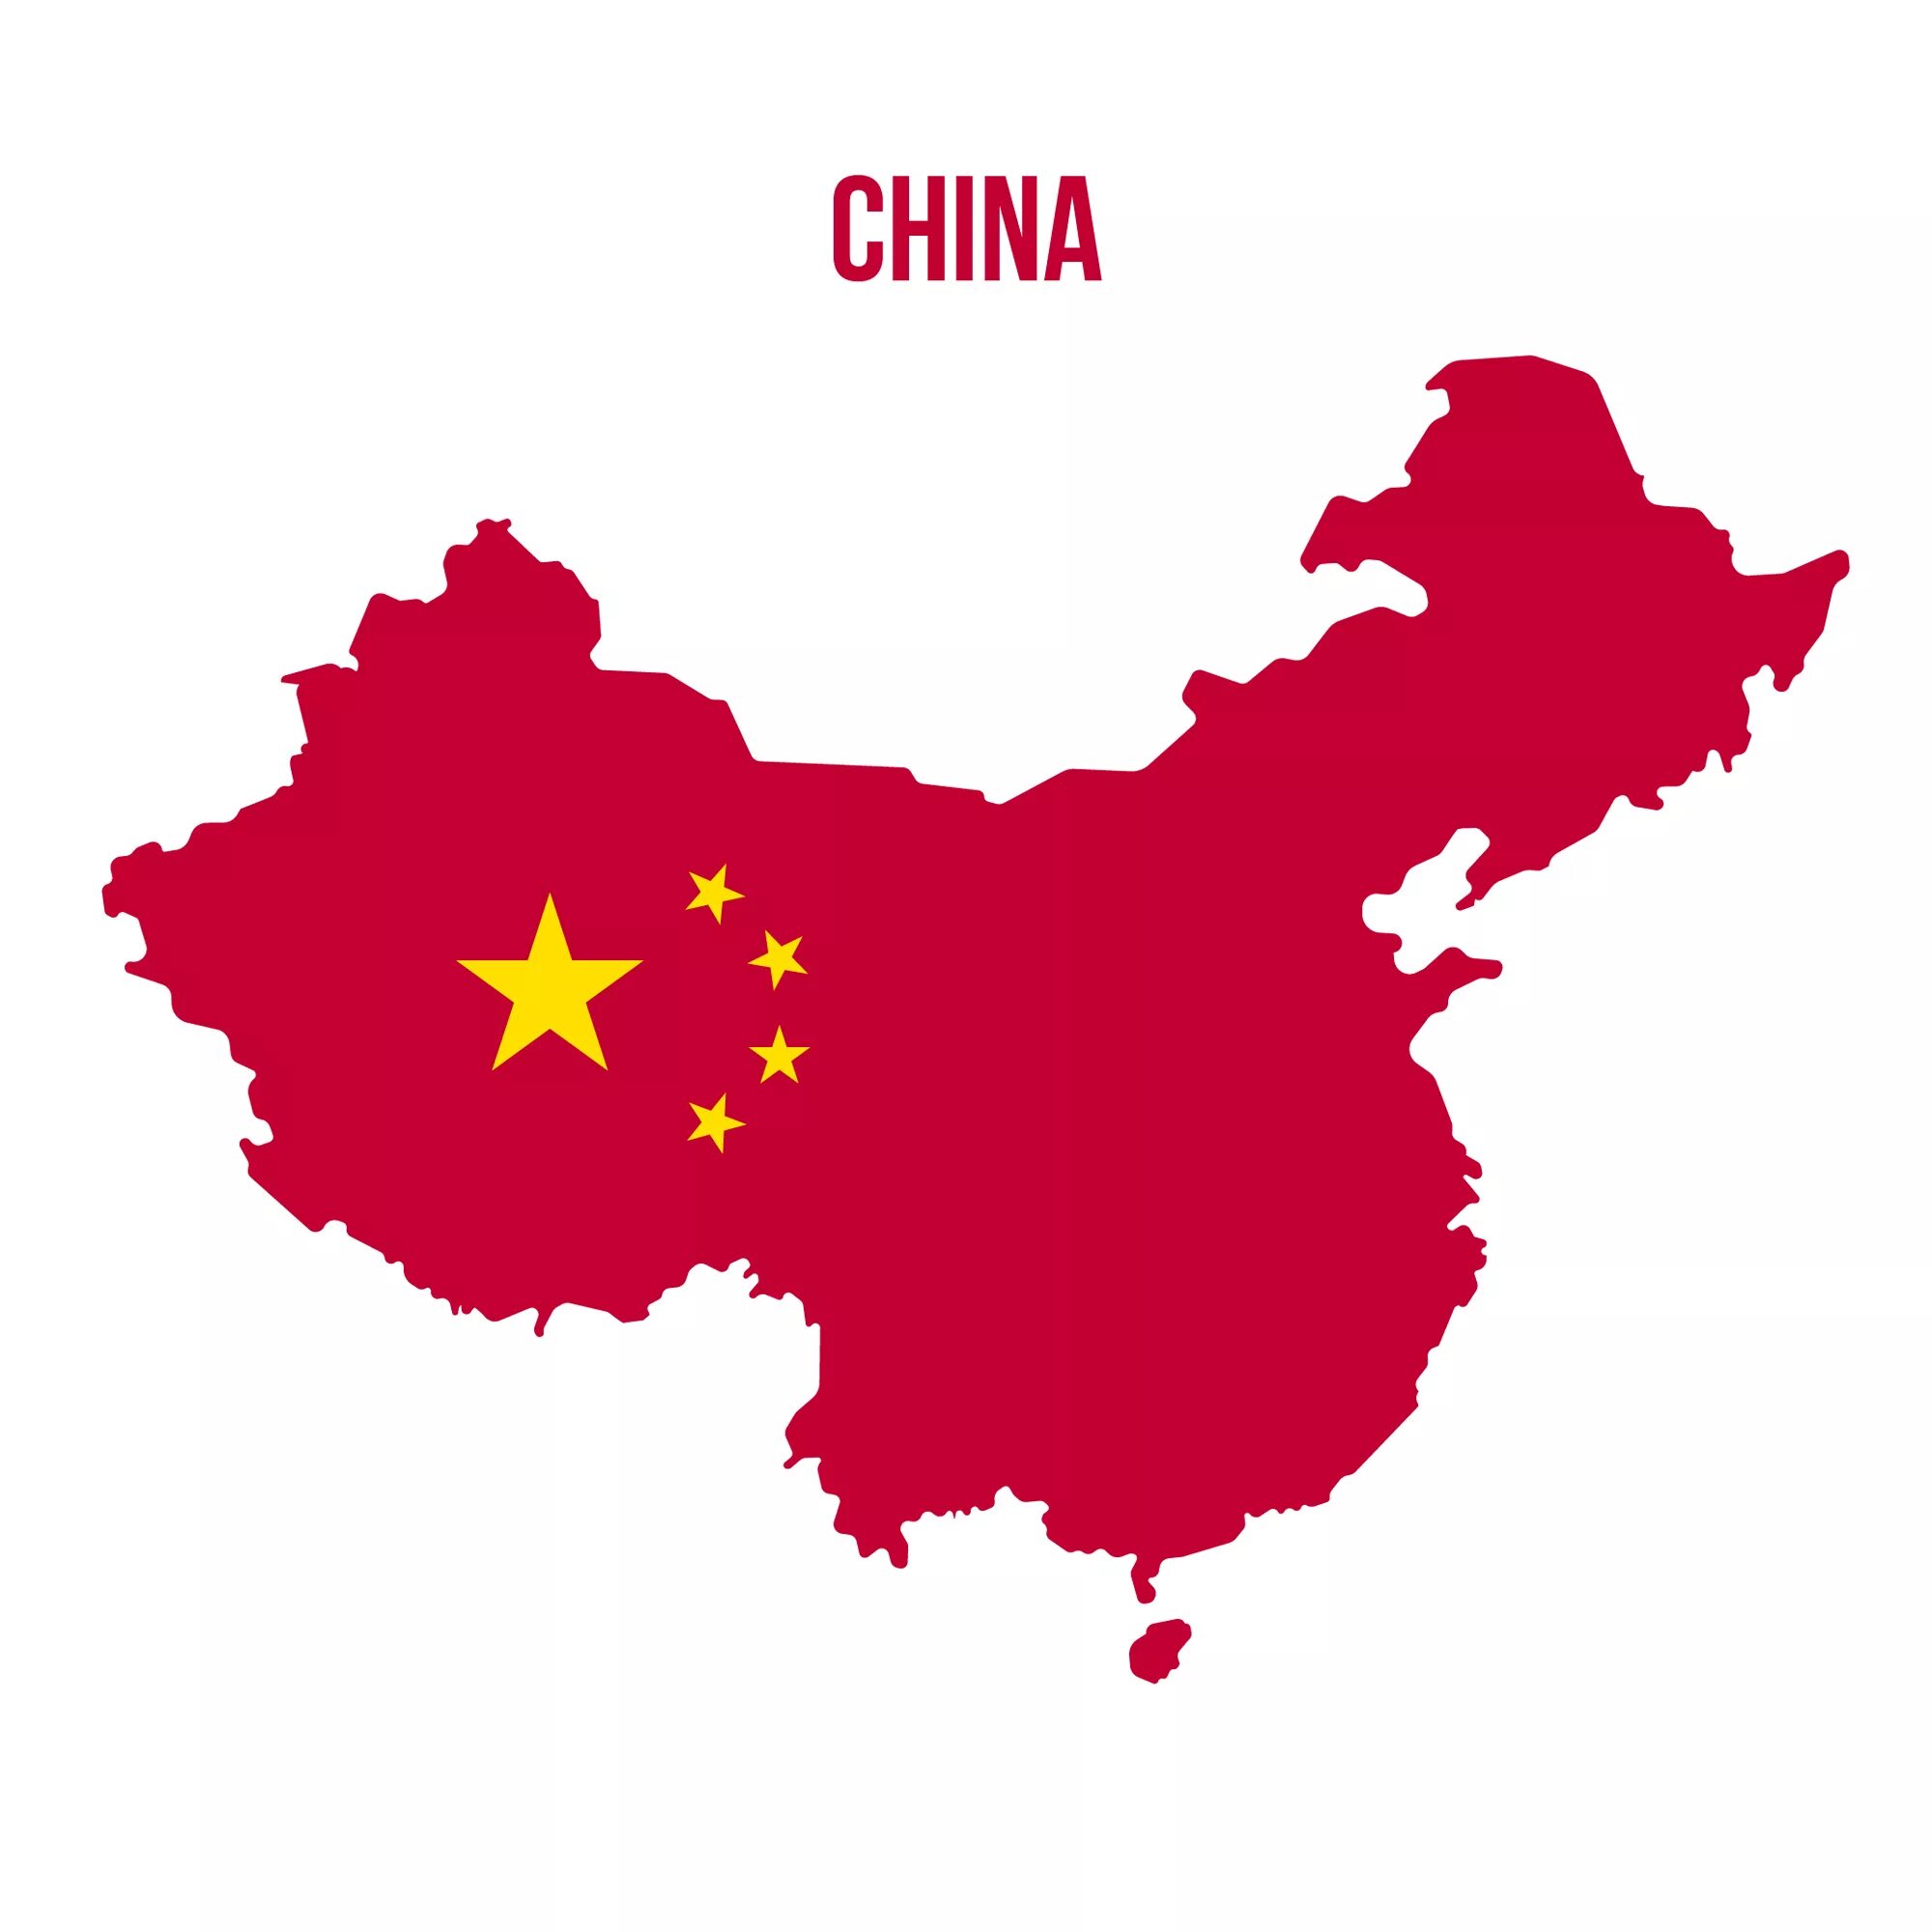 Map of china. Карта Китая. Векторная карта Китая. China на карте. Китай на карте отдельно.